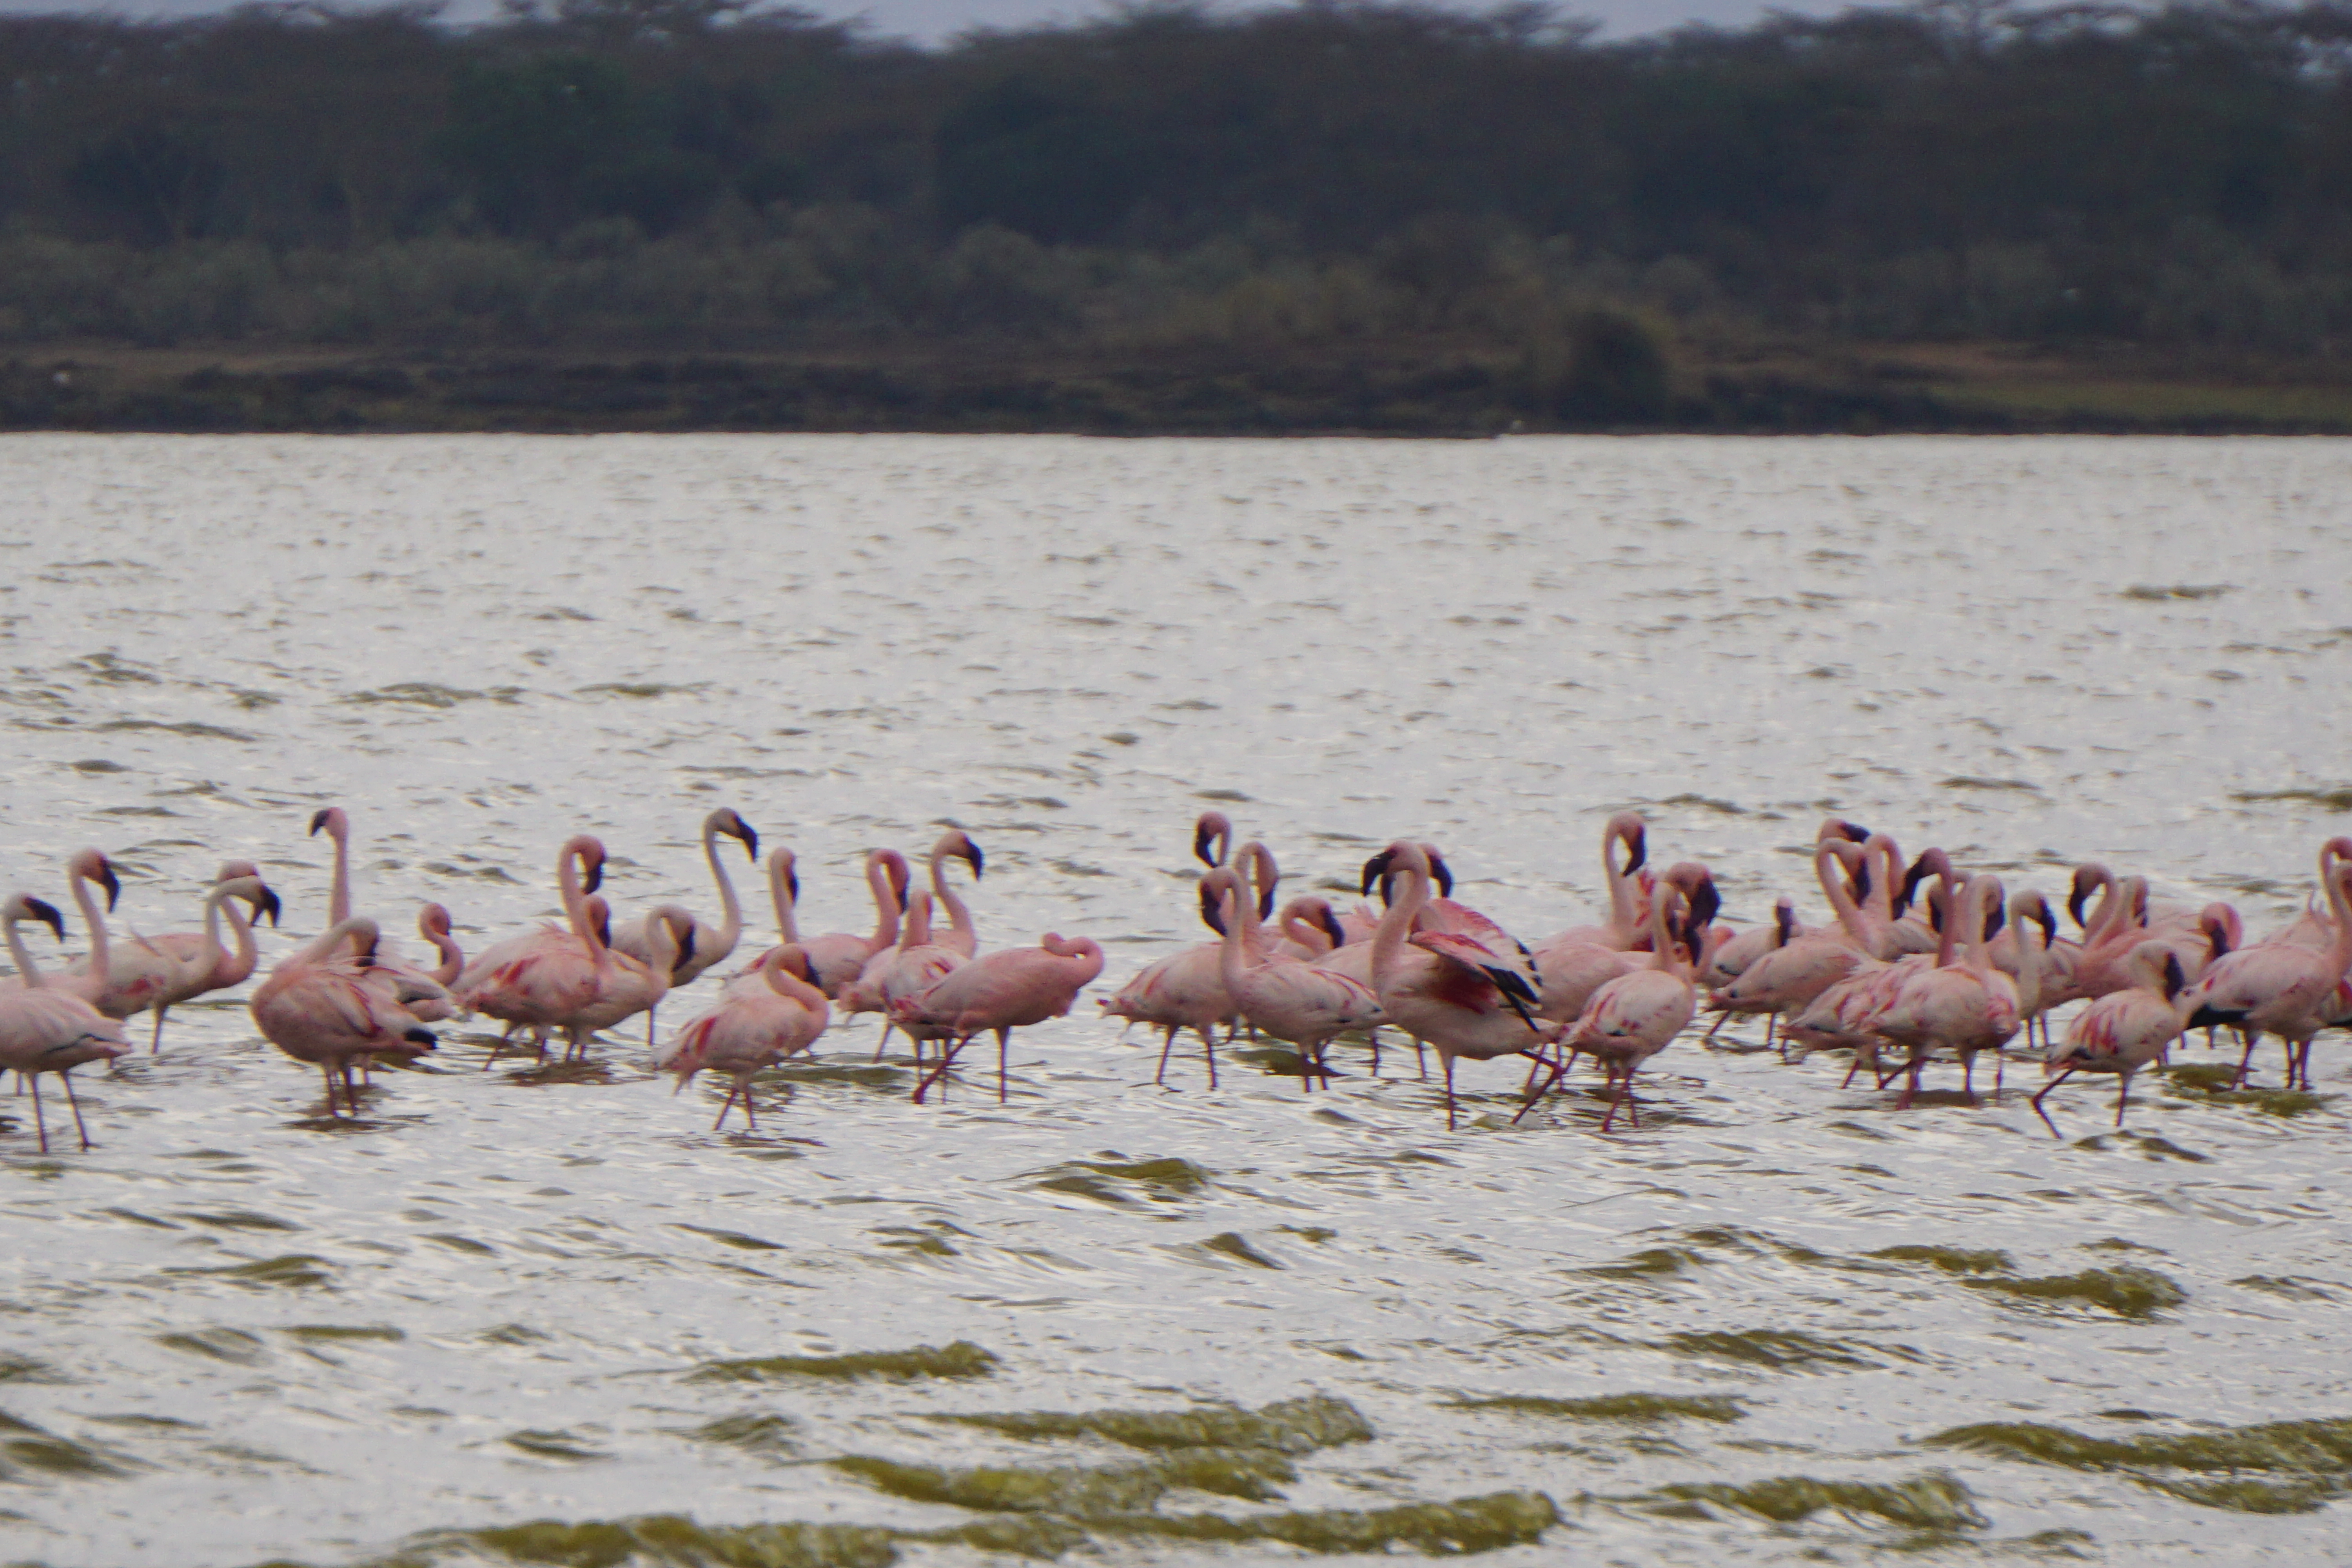 Vegan Travel - My Kenya Trip to Soysambu Conservancy and Lake Elementaita